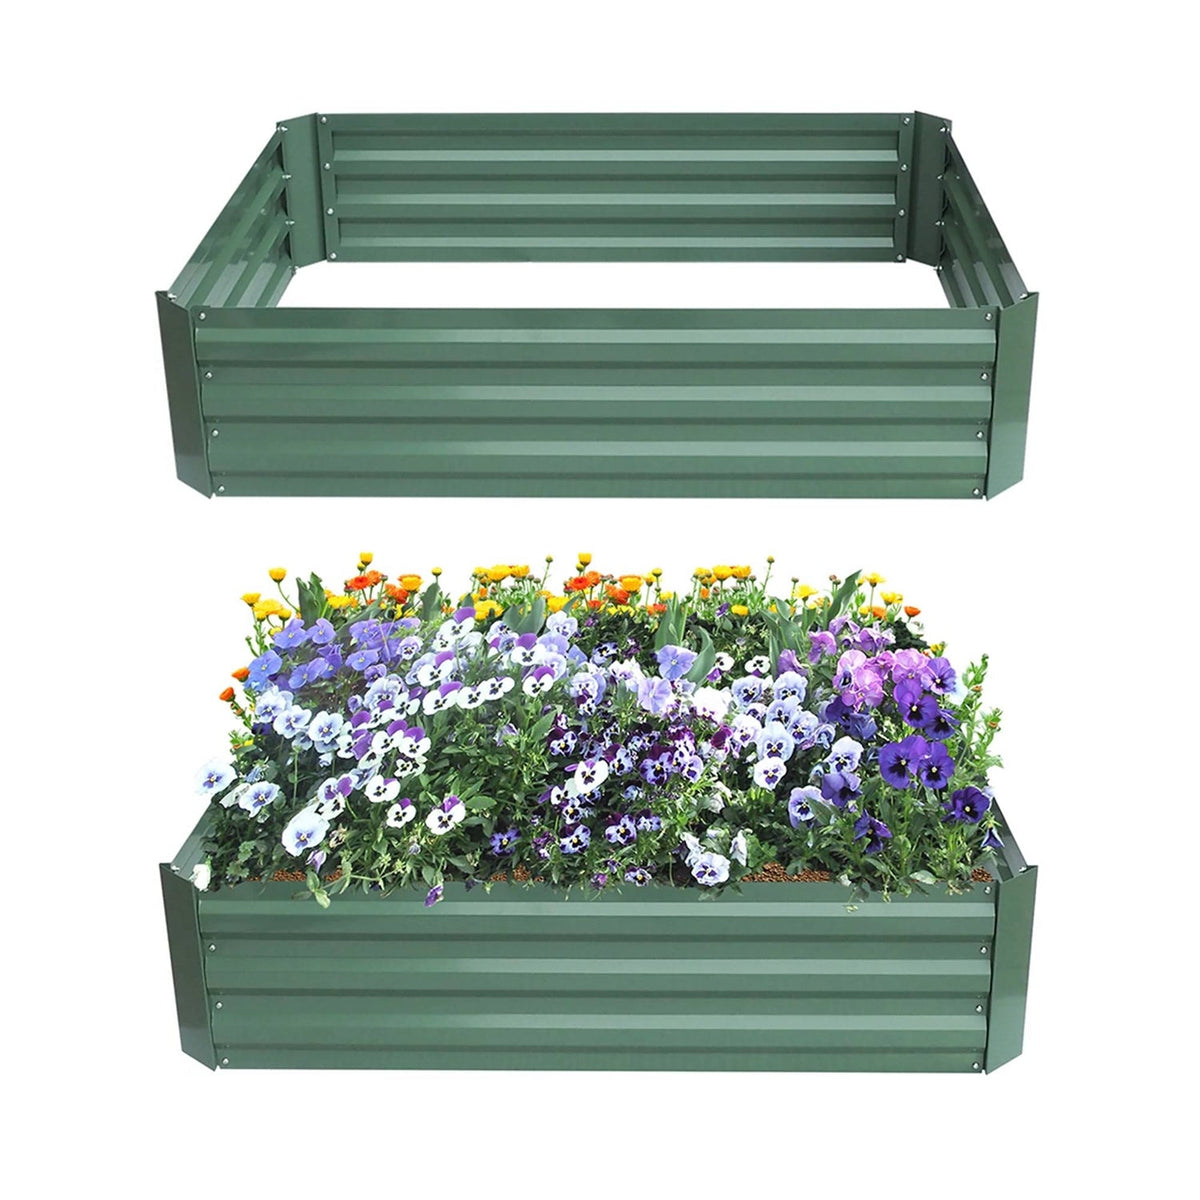 4-ft x 3-ft x 11-inch Raised Garden Bed Planter Box in Green Steel Metal